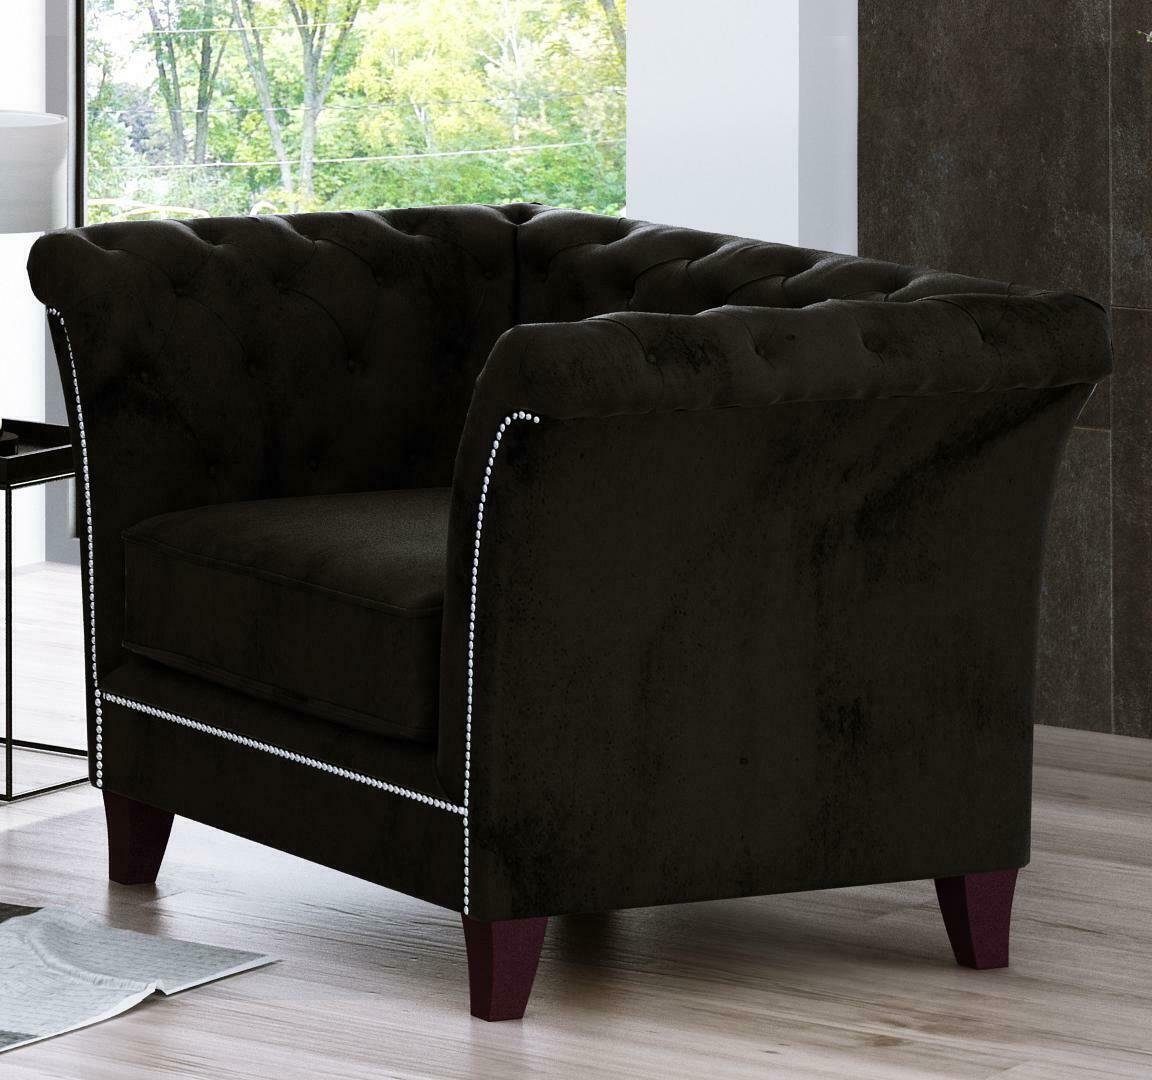 JVmoebel Sessel, Chesterfield Sessel Couch Polster 1 Sitzer Samt Design Couchen Sofas Textil Neu Schwarz